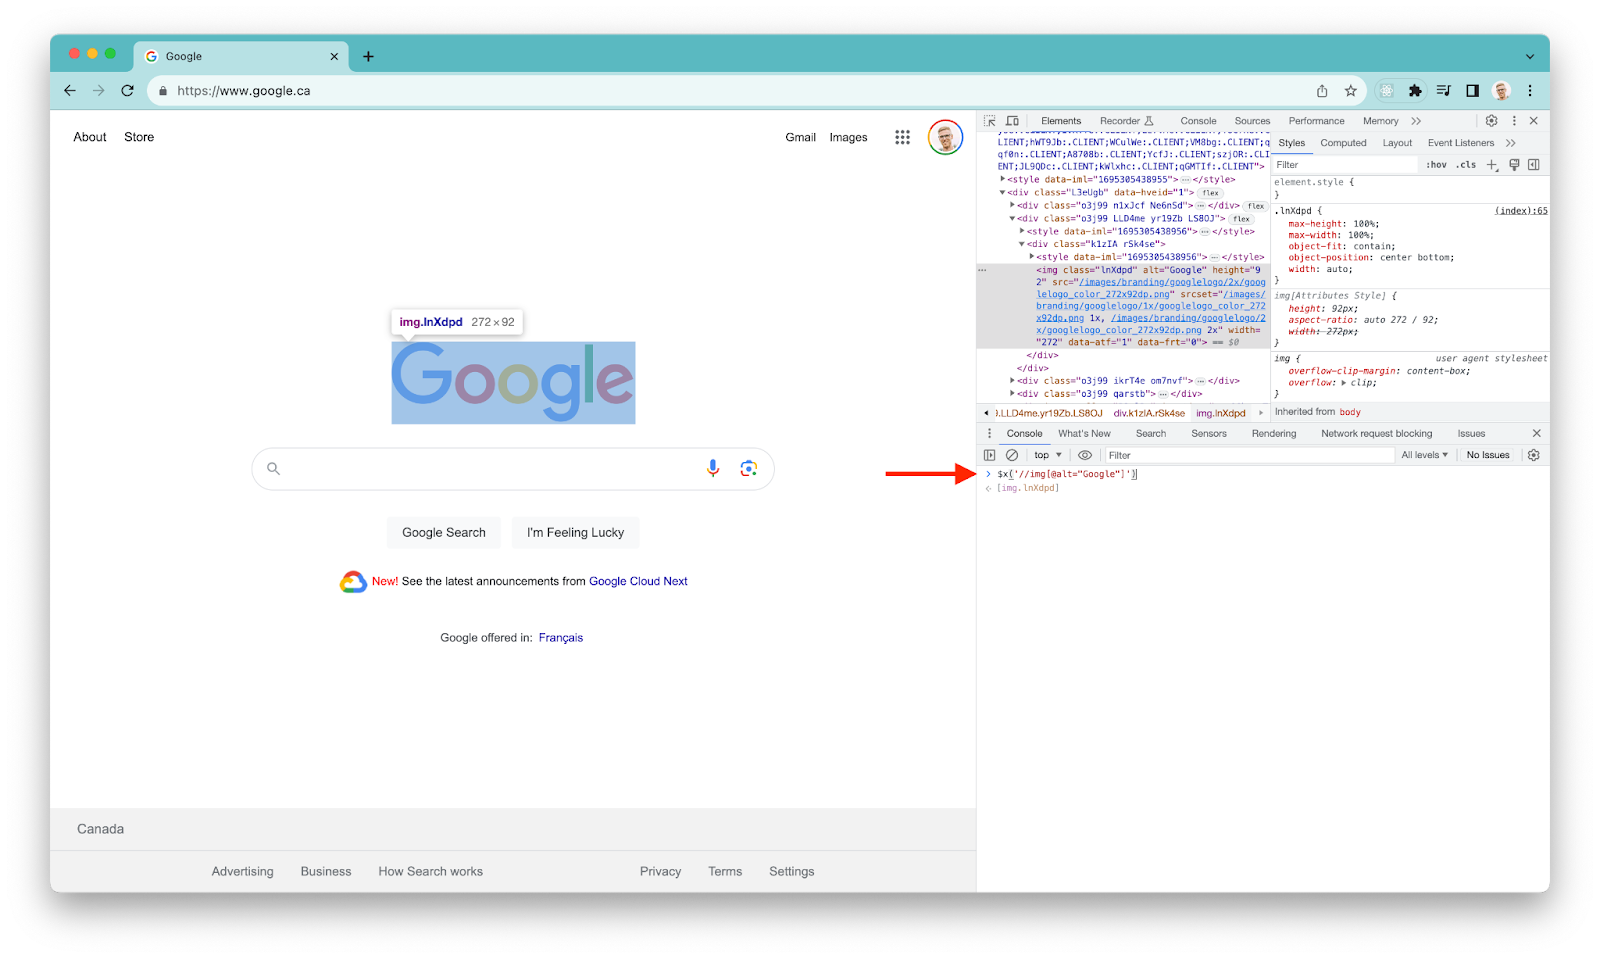 Locating the Google Logo using XPath and Chrome Dev Tools